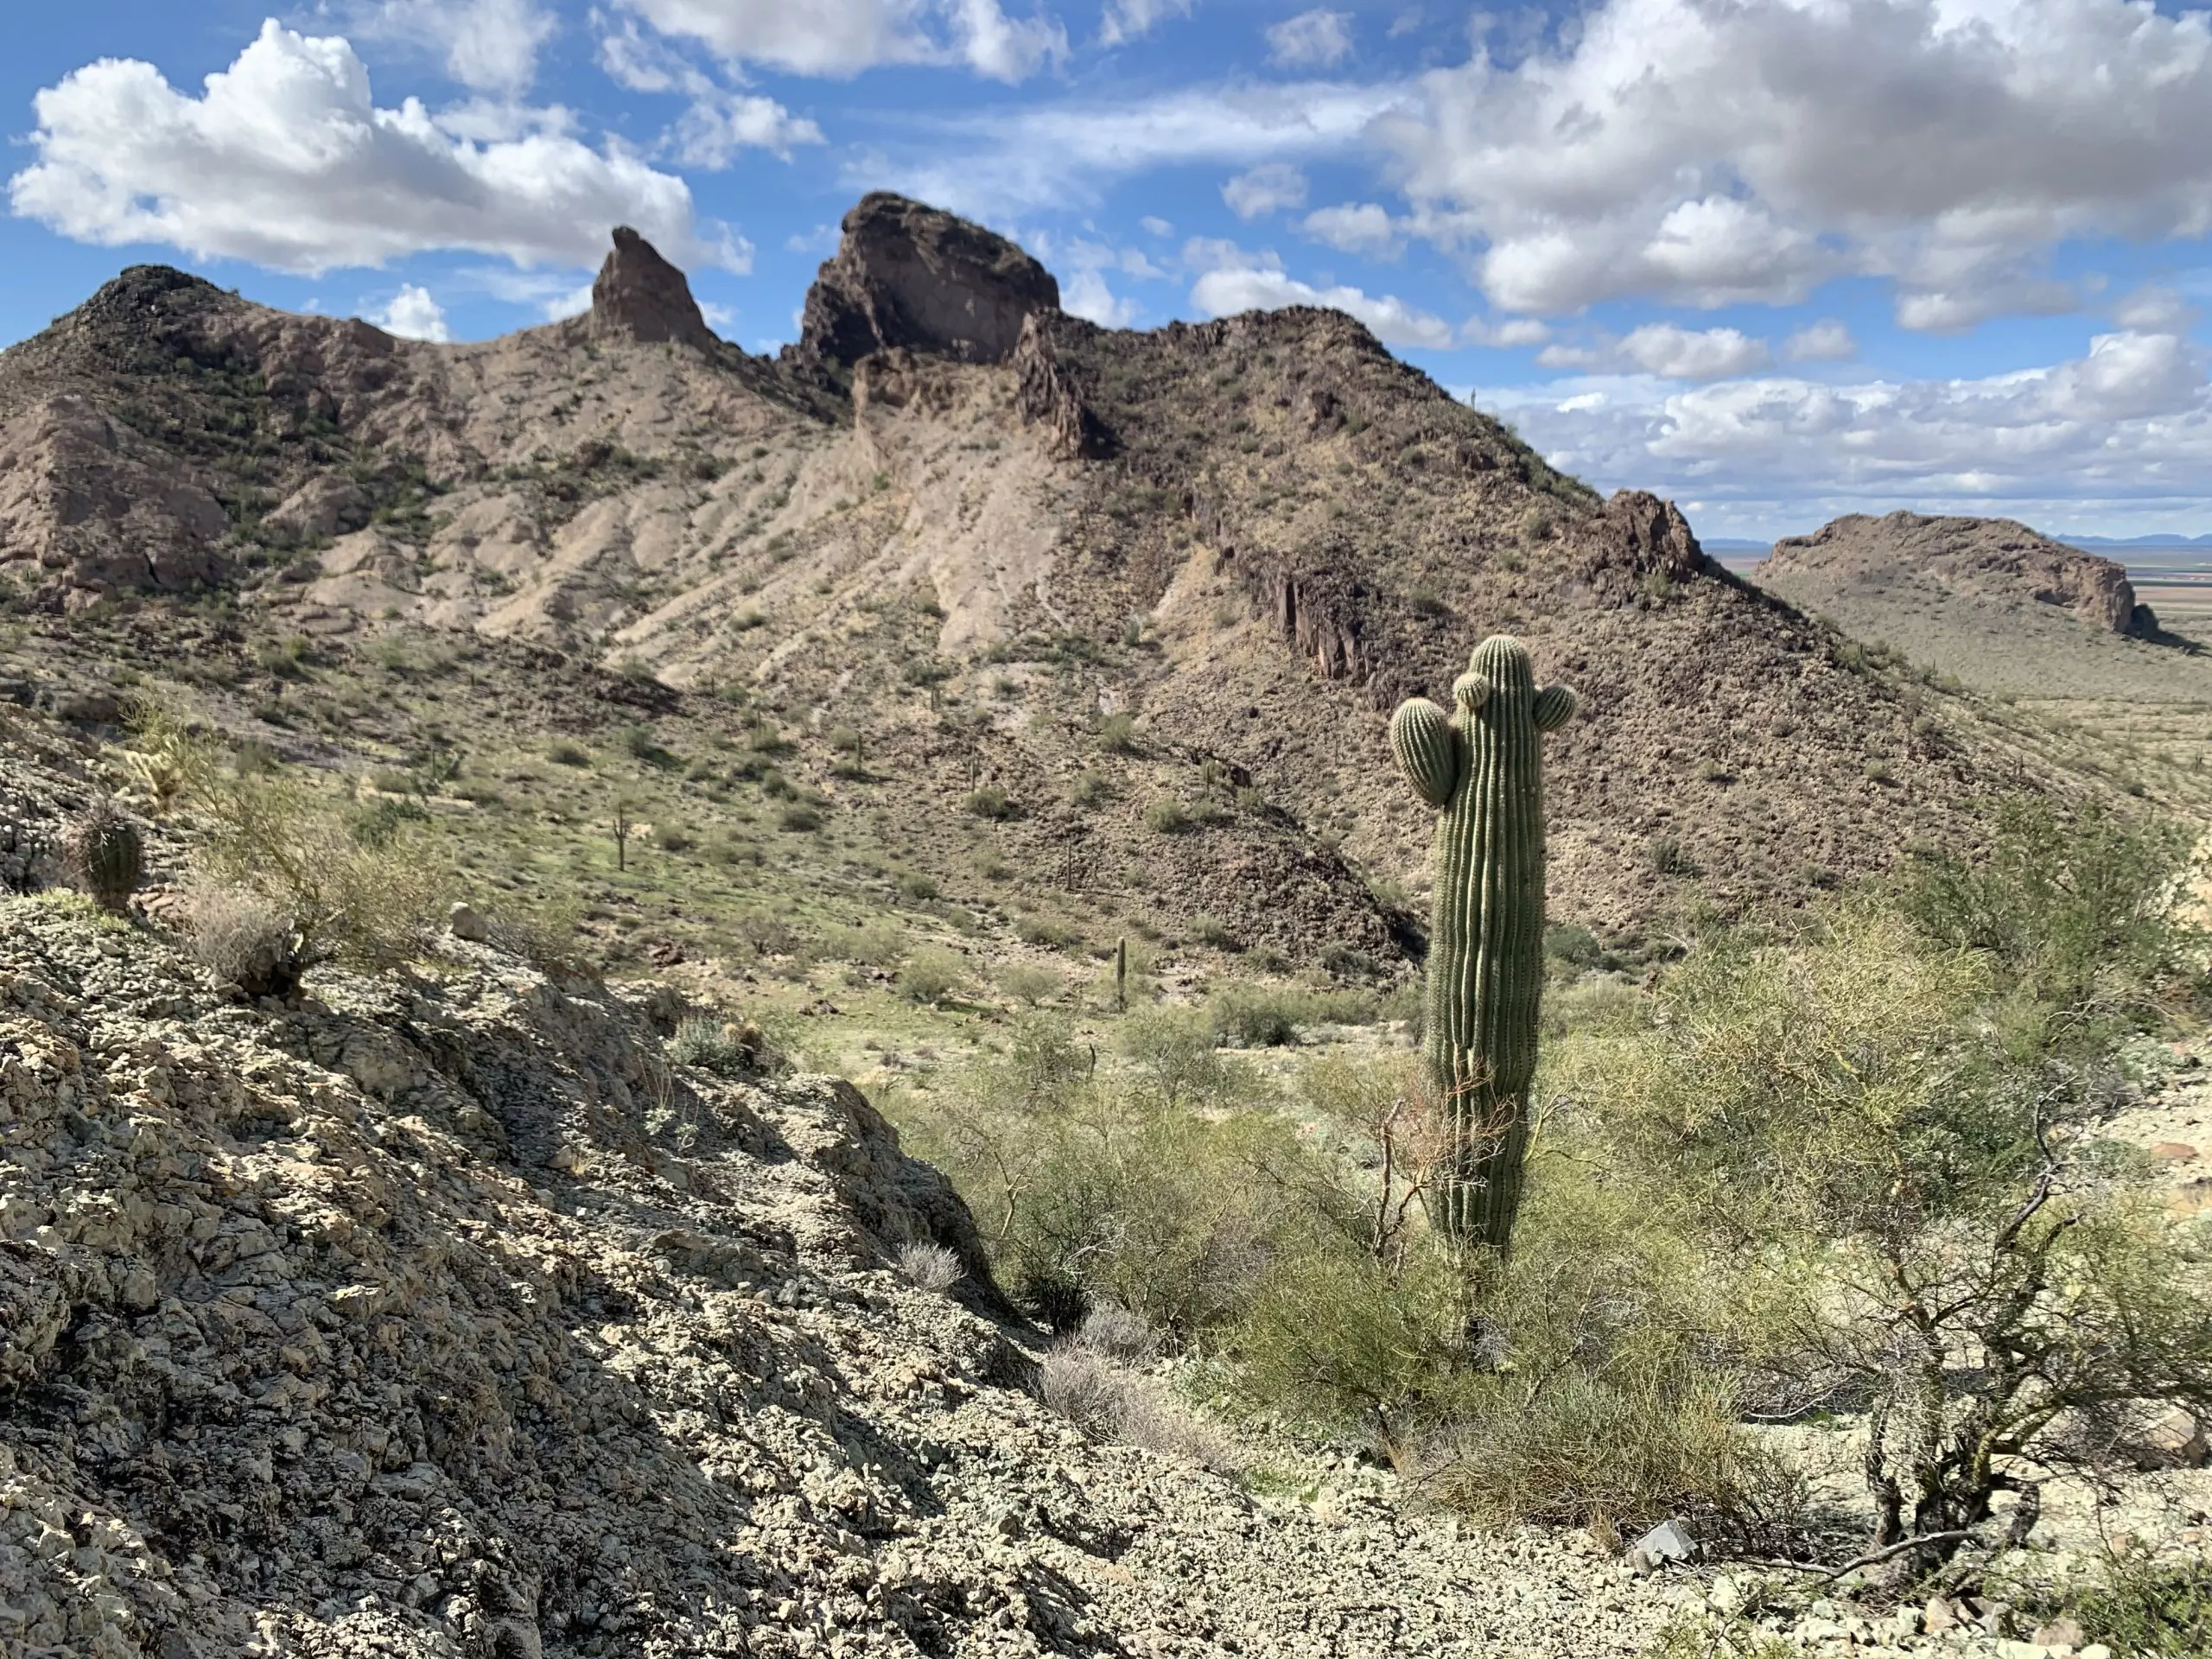 Saguaro cactus in the Signal Mountain desert.